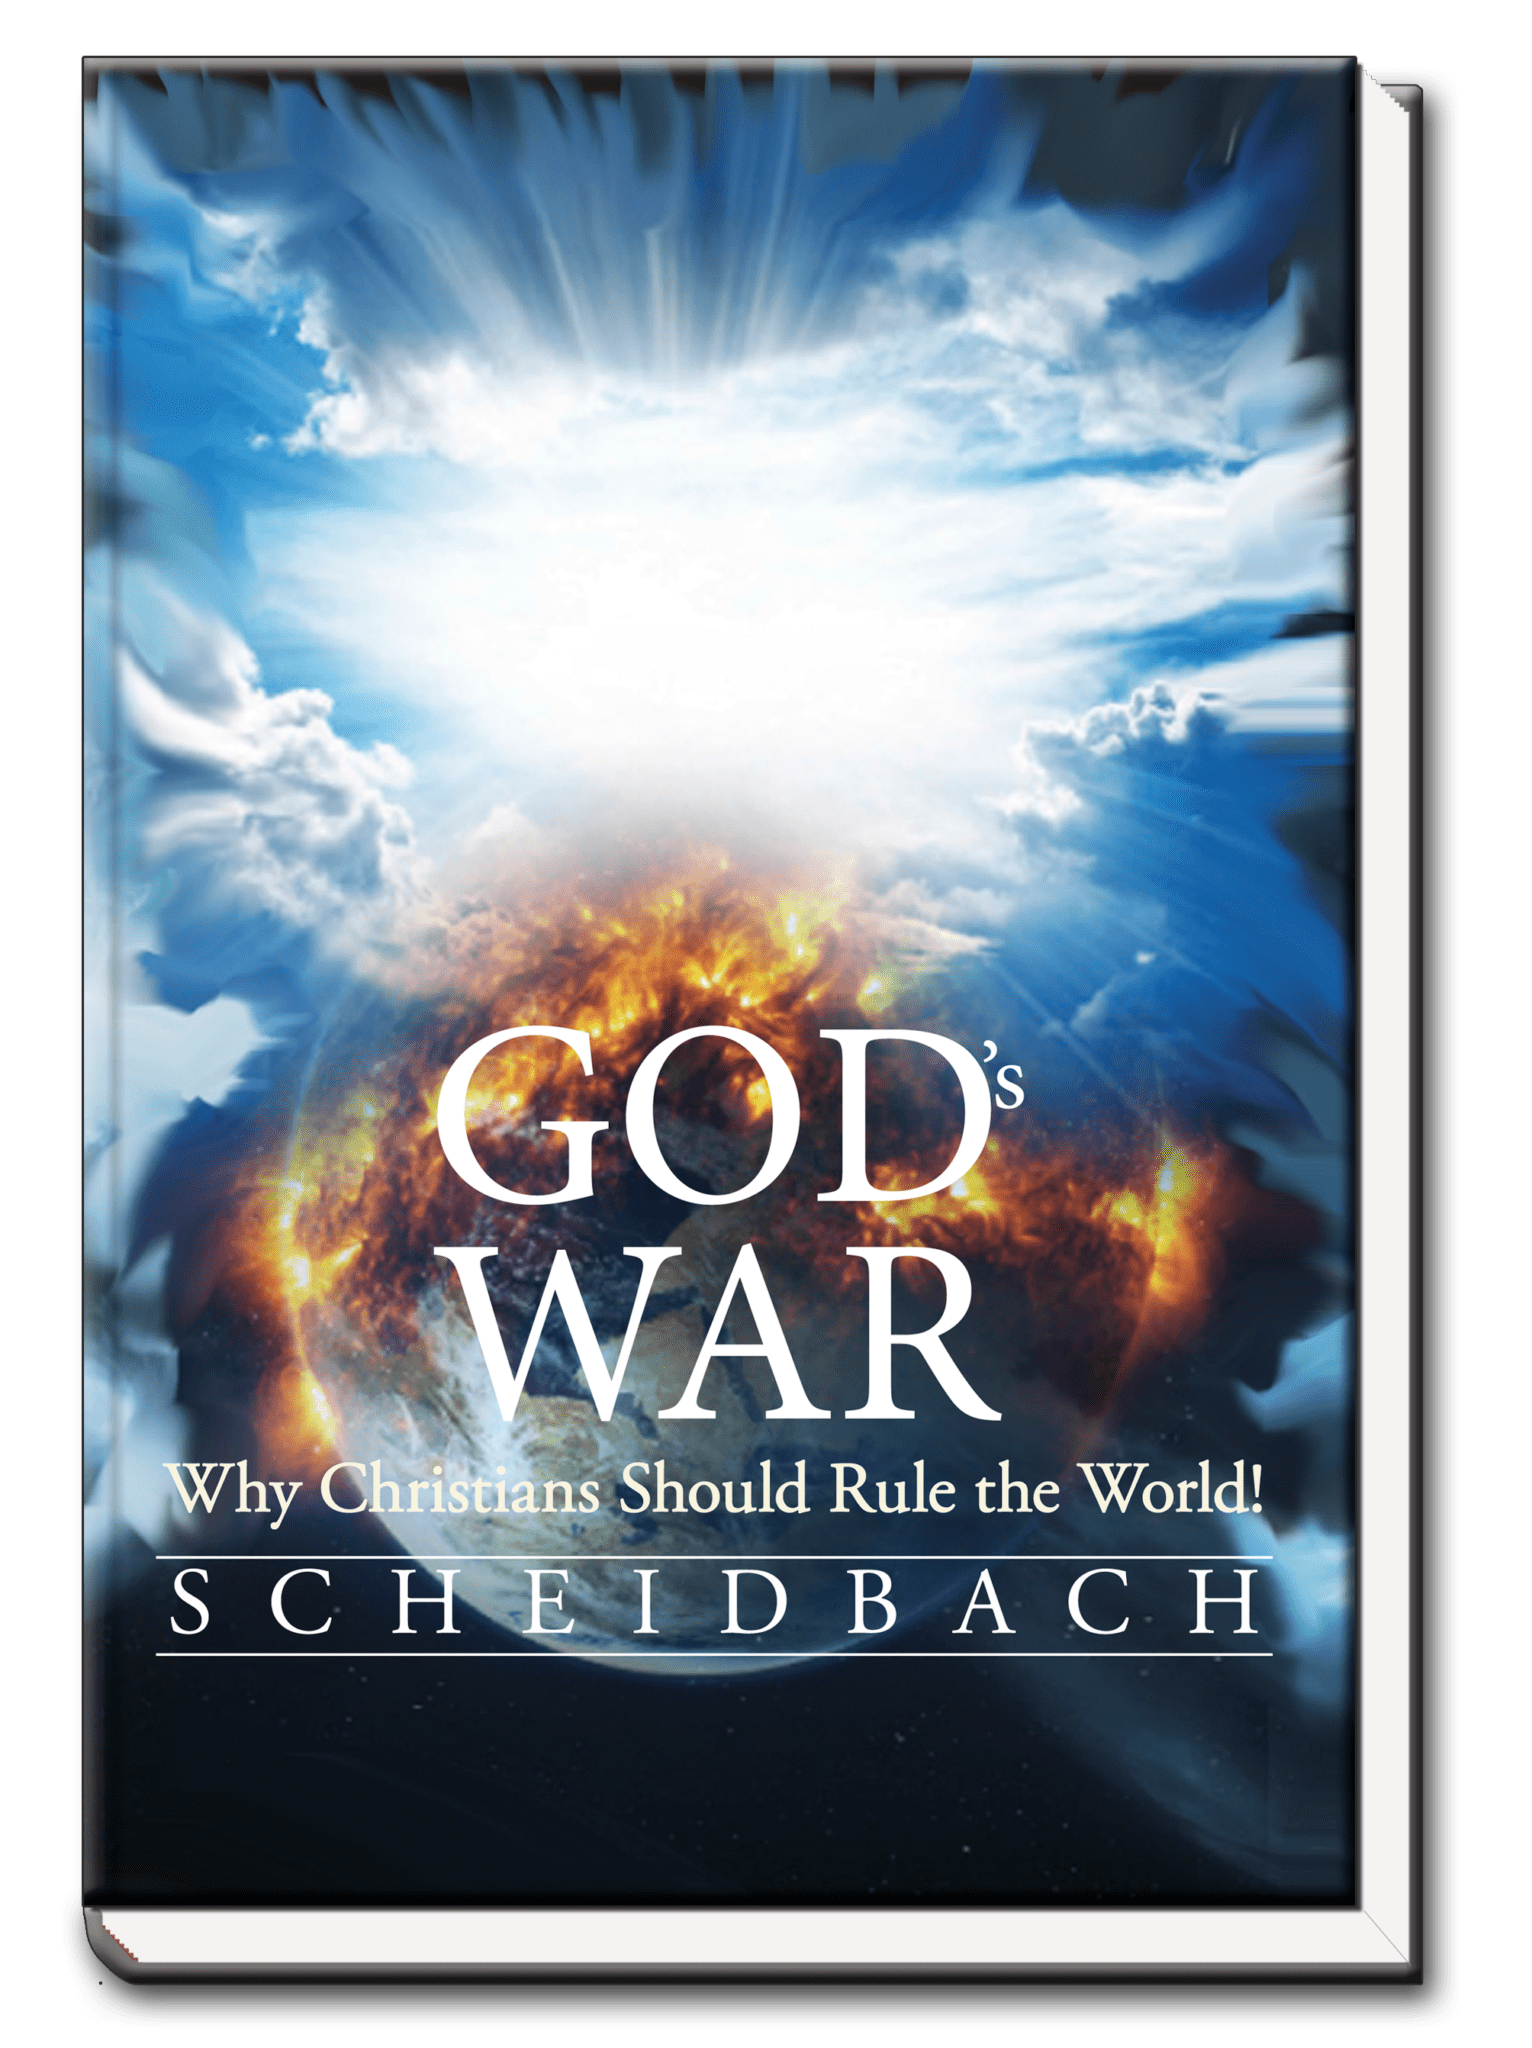 God’s War (Hardback Edition)